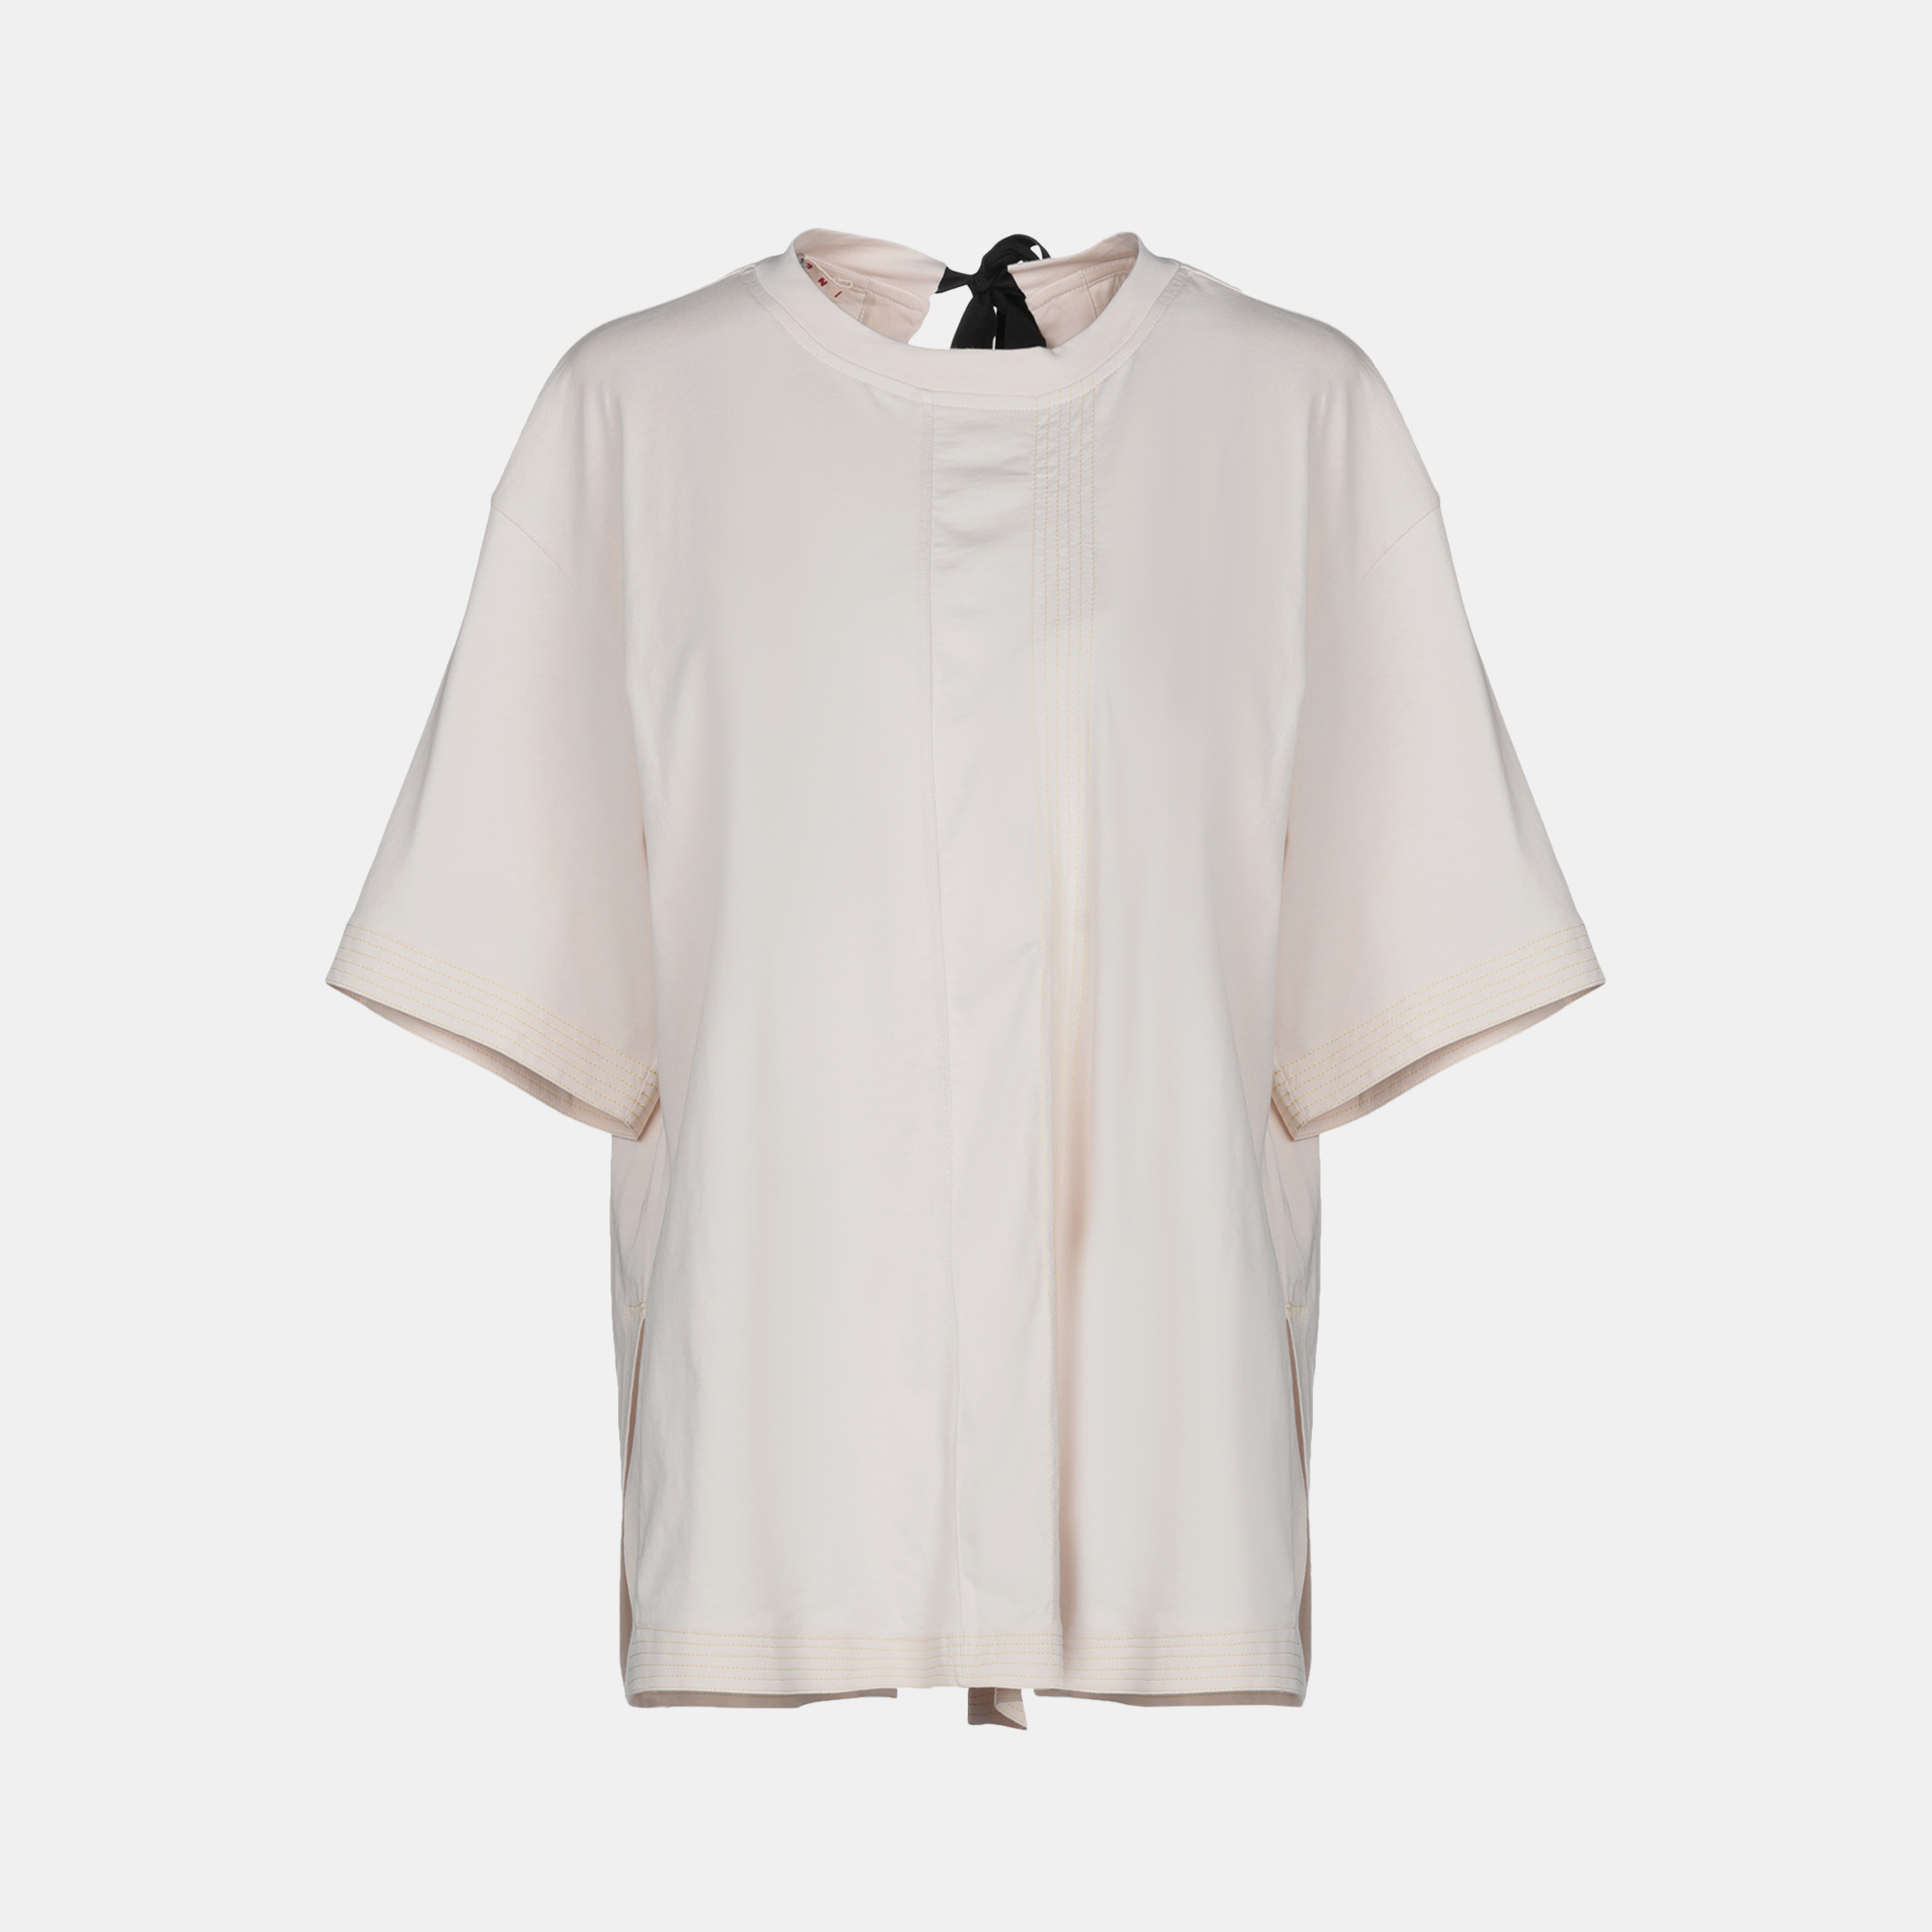 Marni cotton t-shirt 40